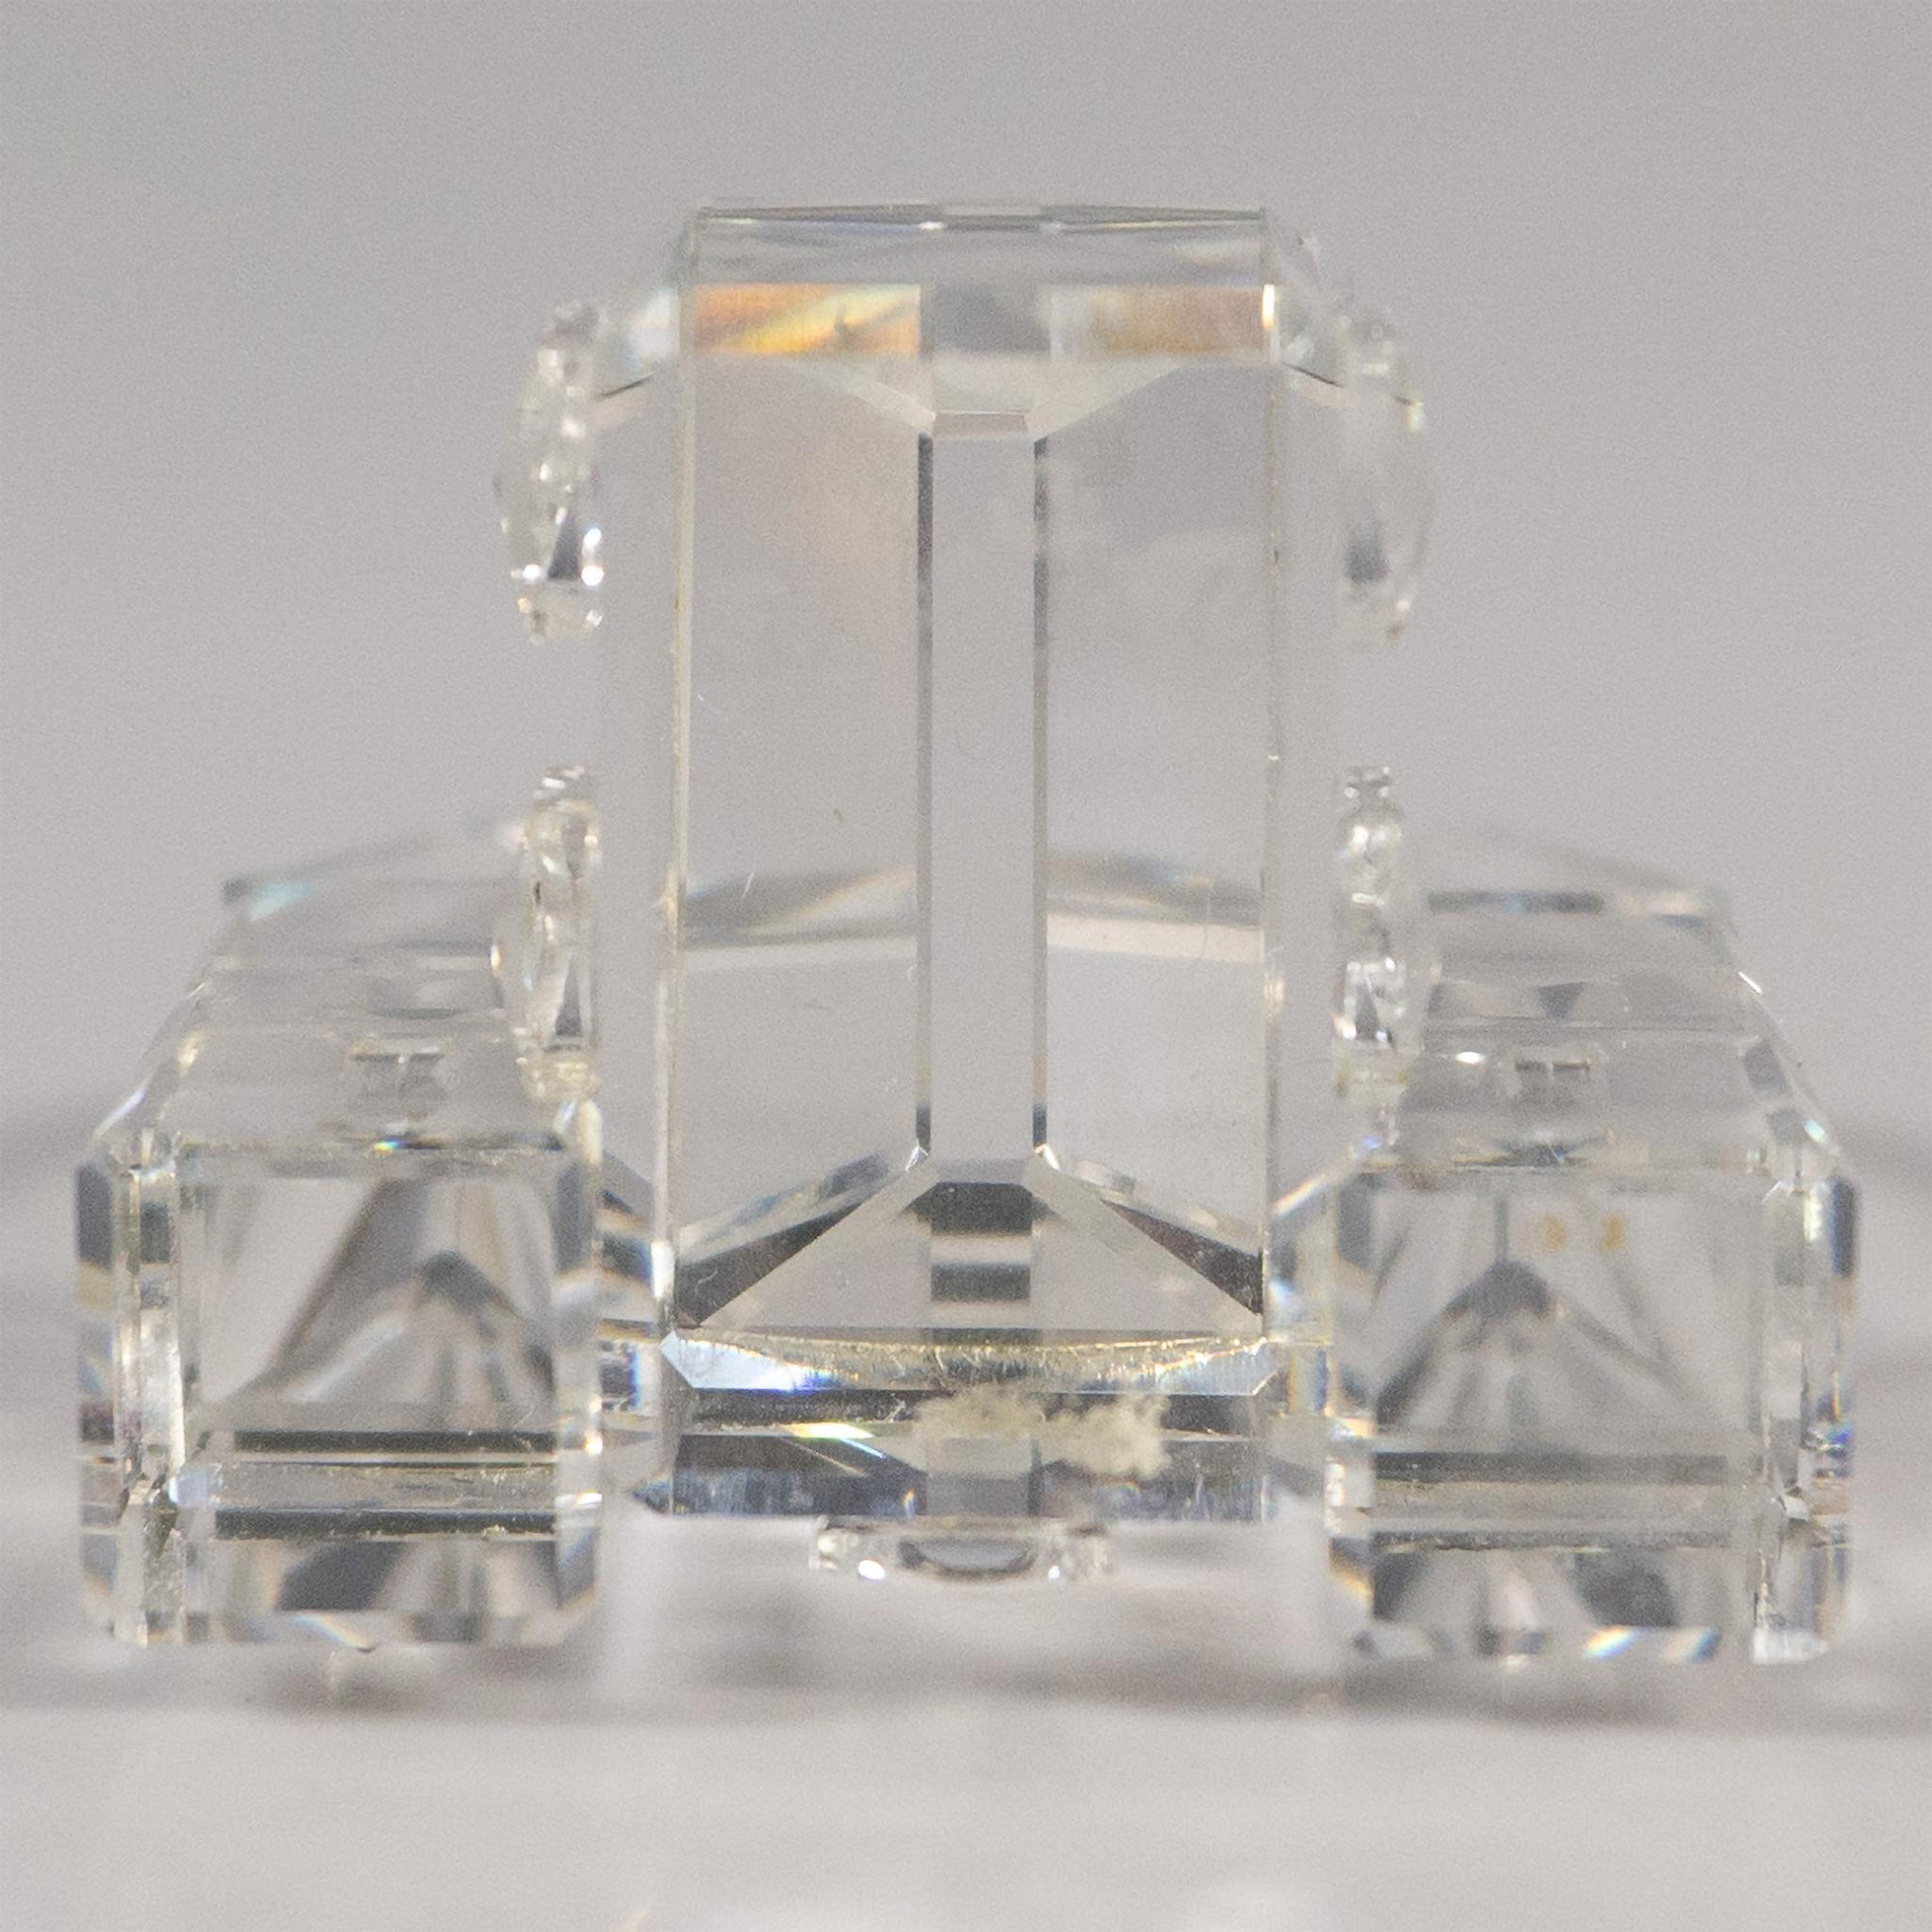 Swarovski Silver Crystal City Figurine, Cathedral - Image 3 of 4